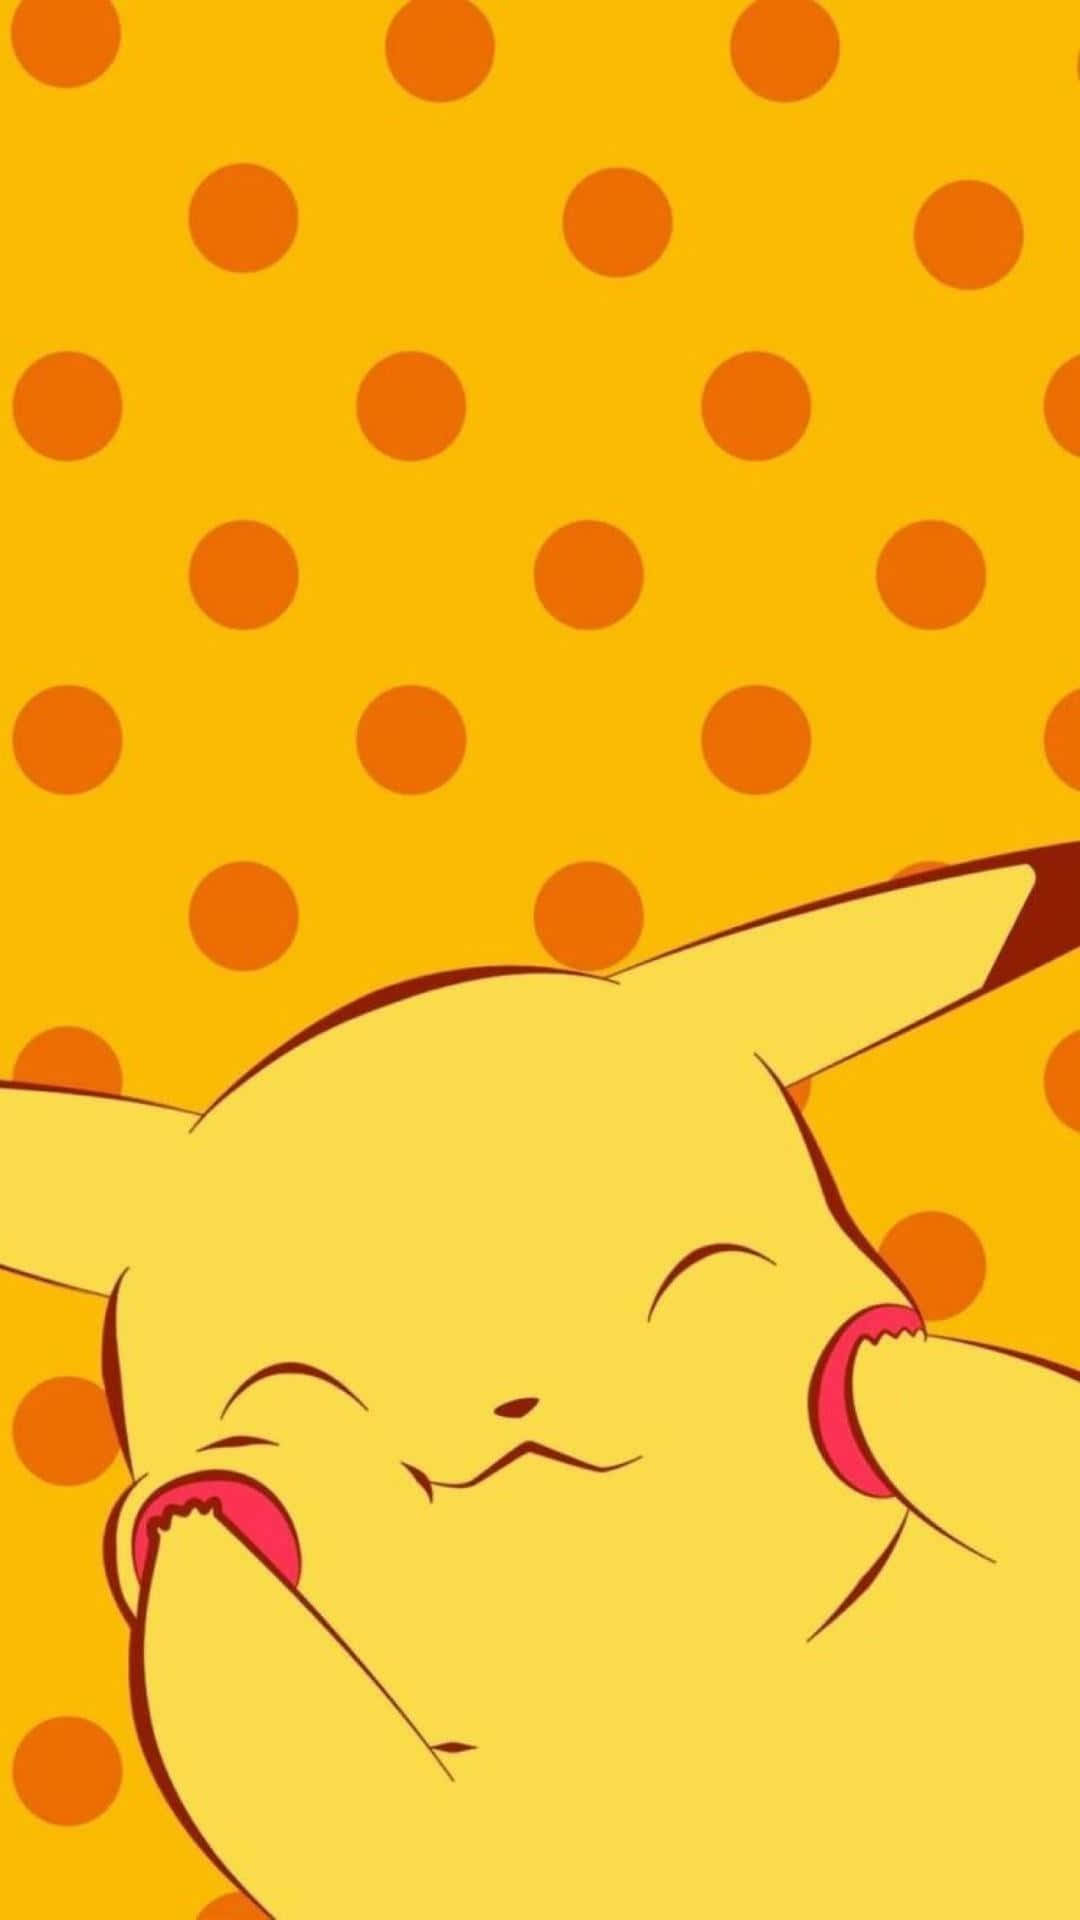 Pikachu Laying On A Yellow Polka Dot Background